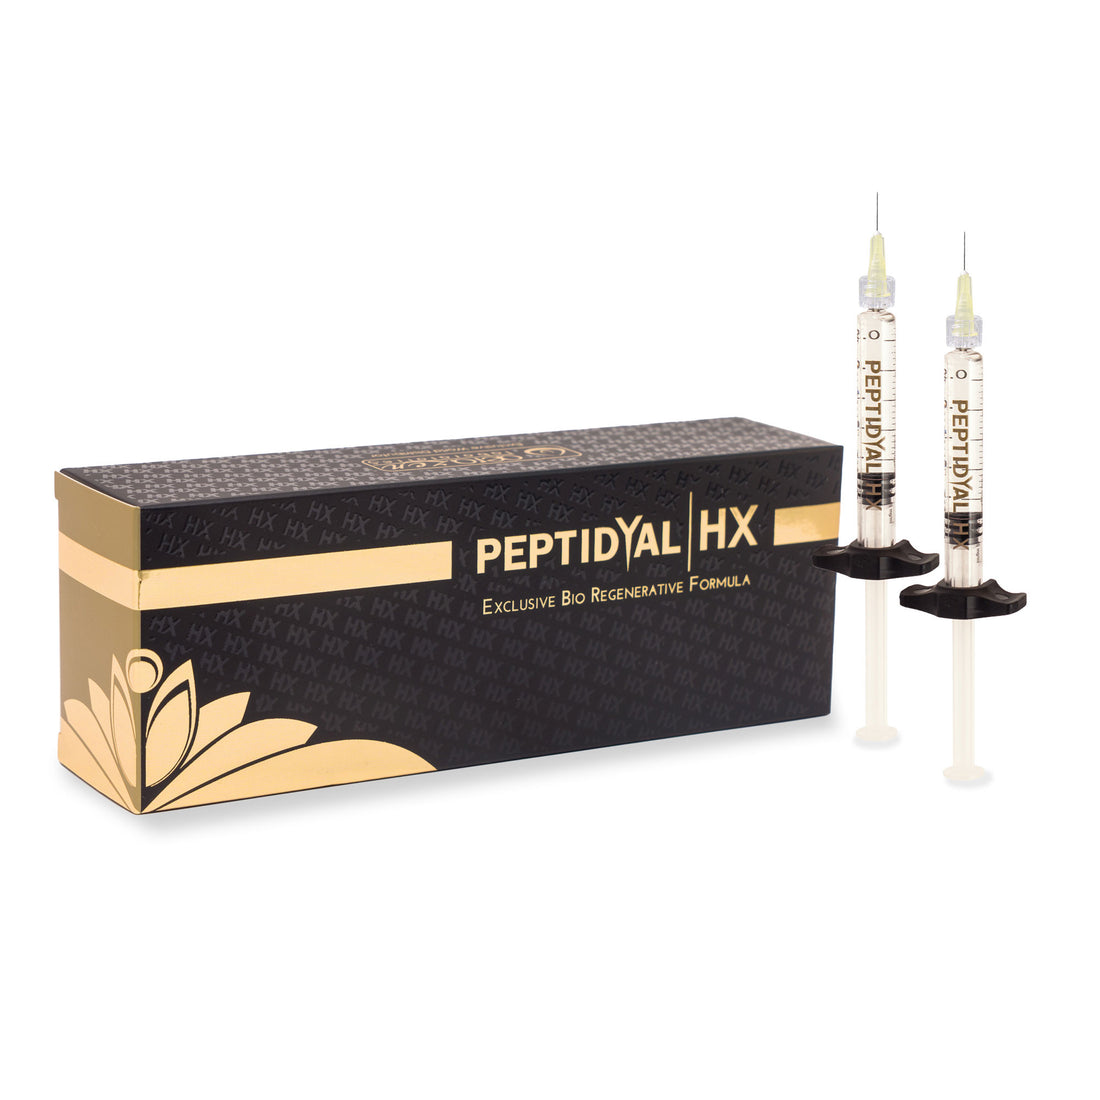 Peptidyal HX - Αποκλειστική Bio Regenerative Formula